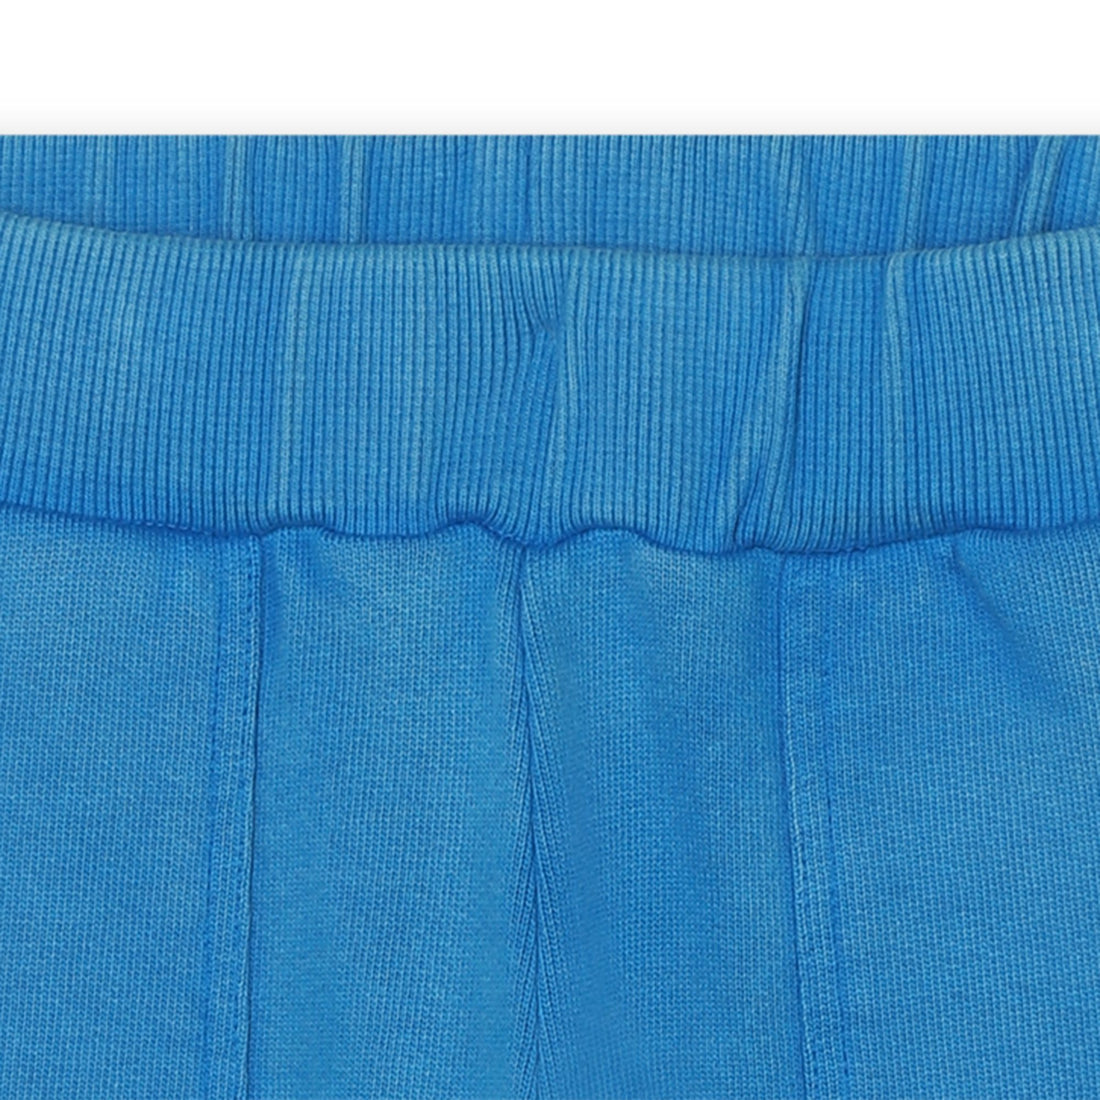 Short en molleton Bleu logo Marc Jacobs garçon 